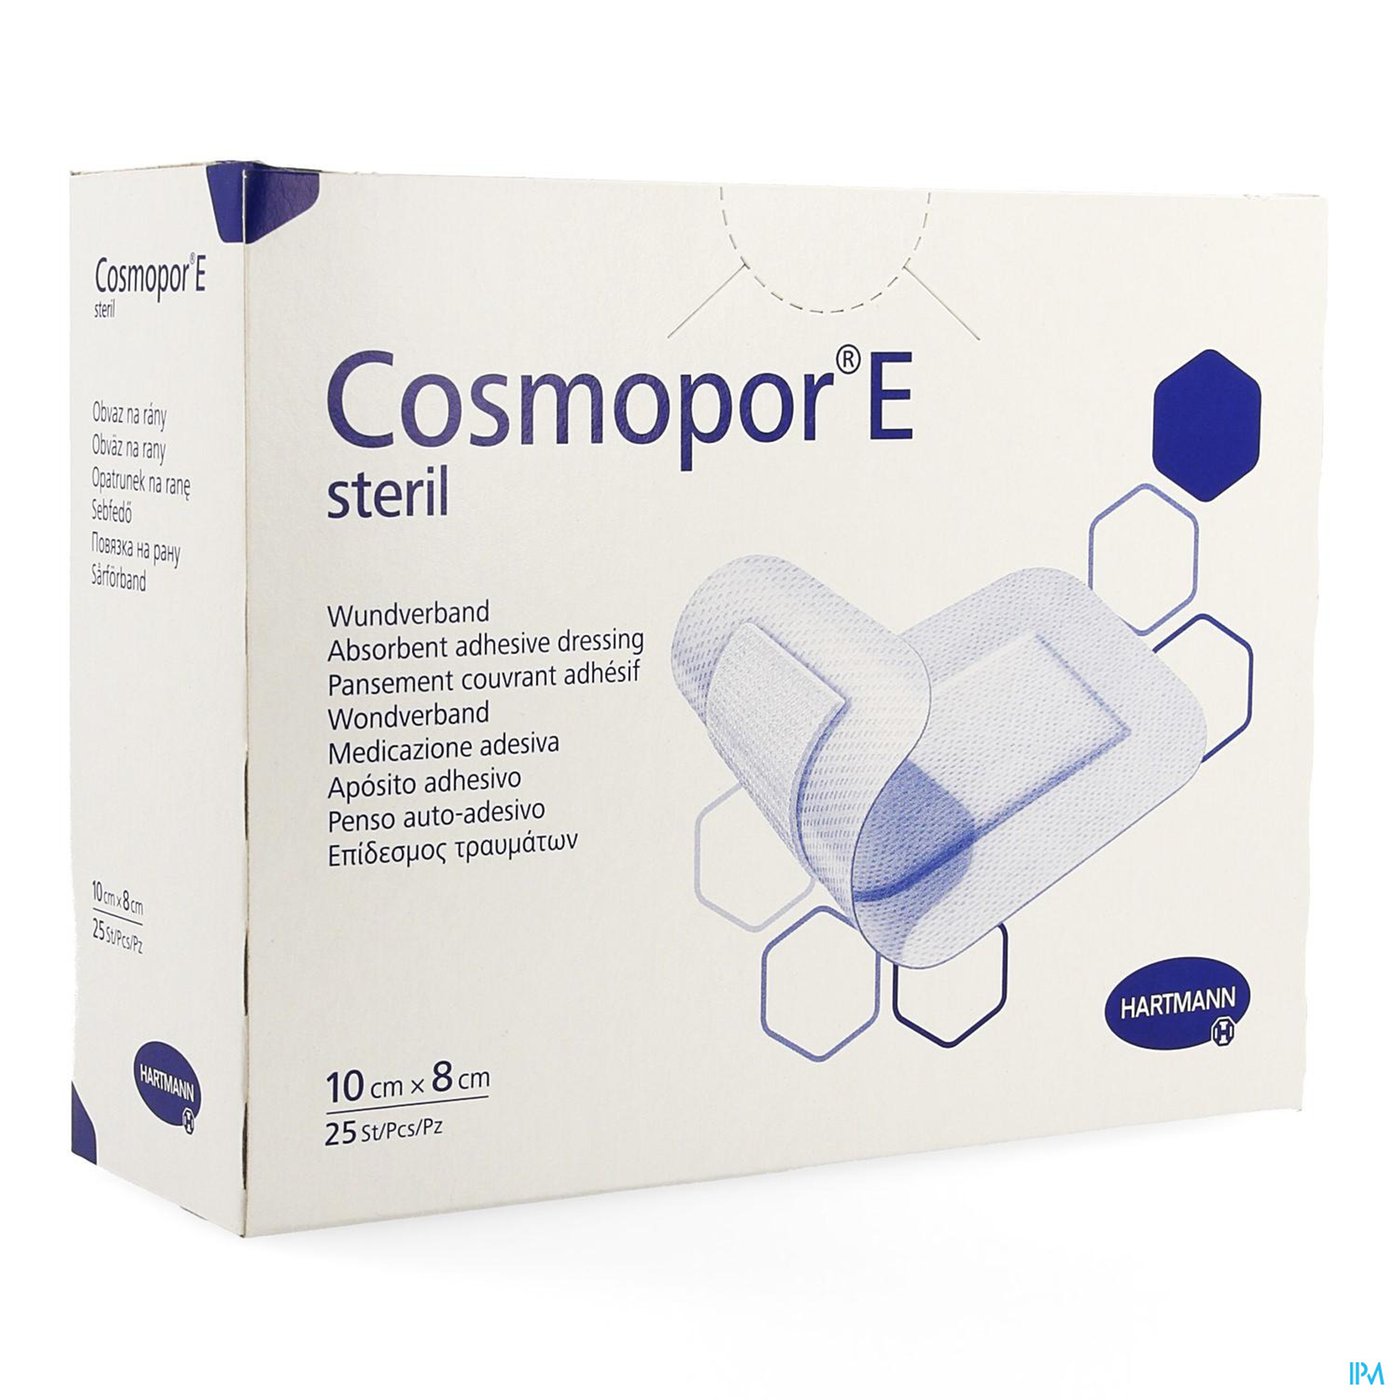 Cosmopor E Latexfree 10x8cm 25 P/s packshot